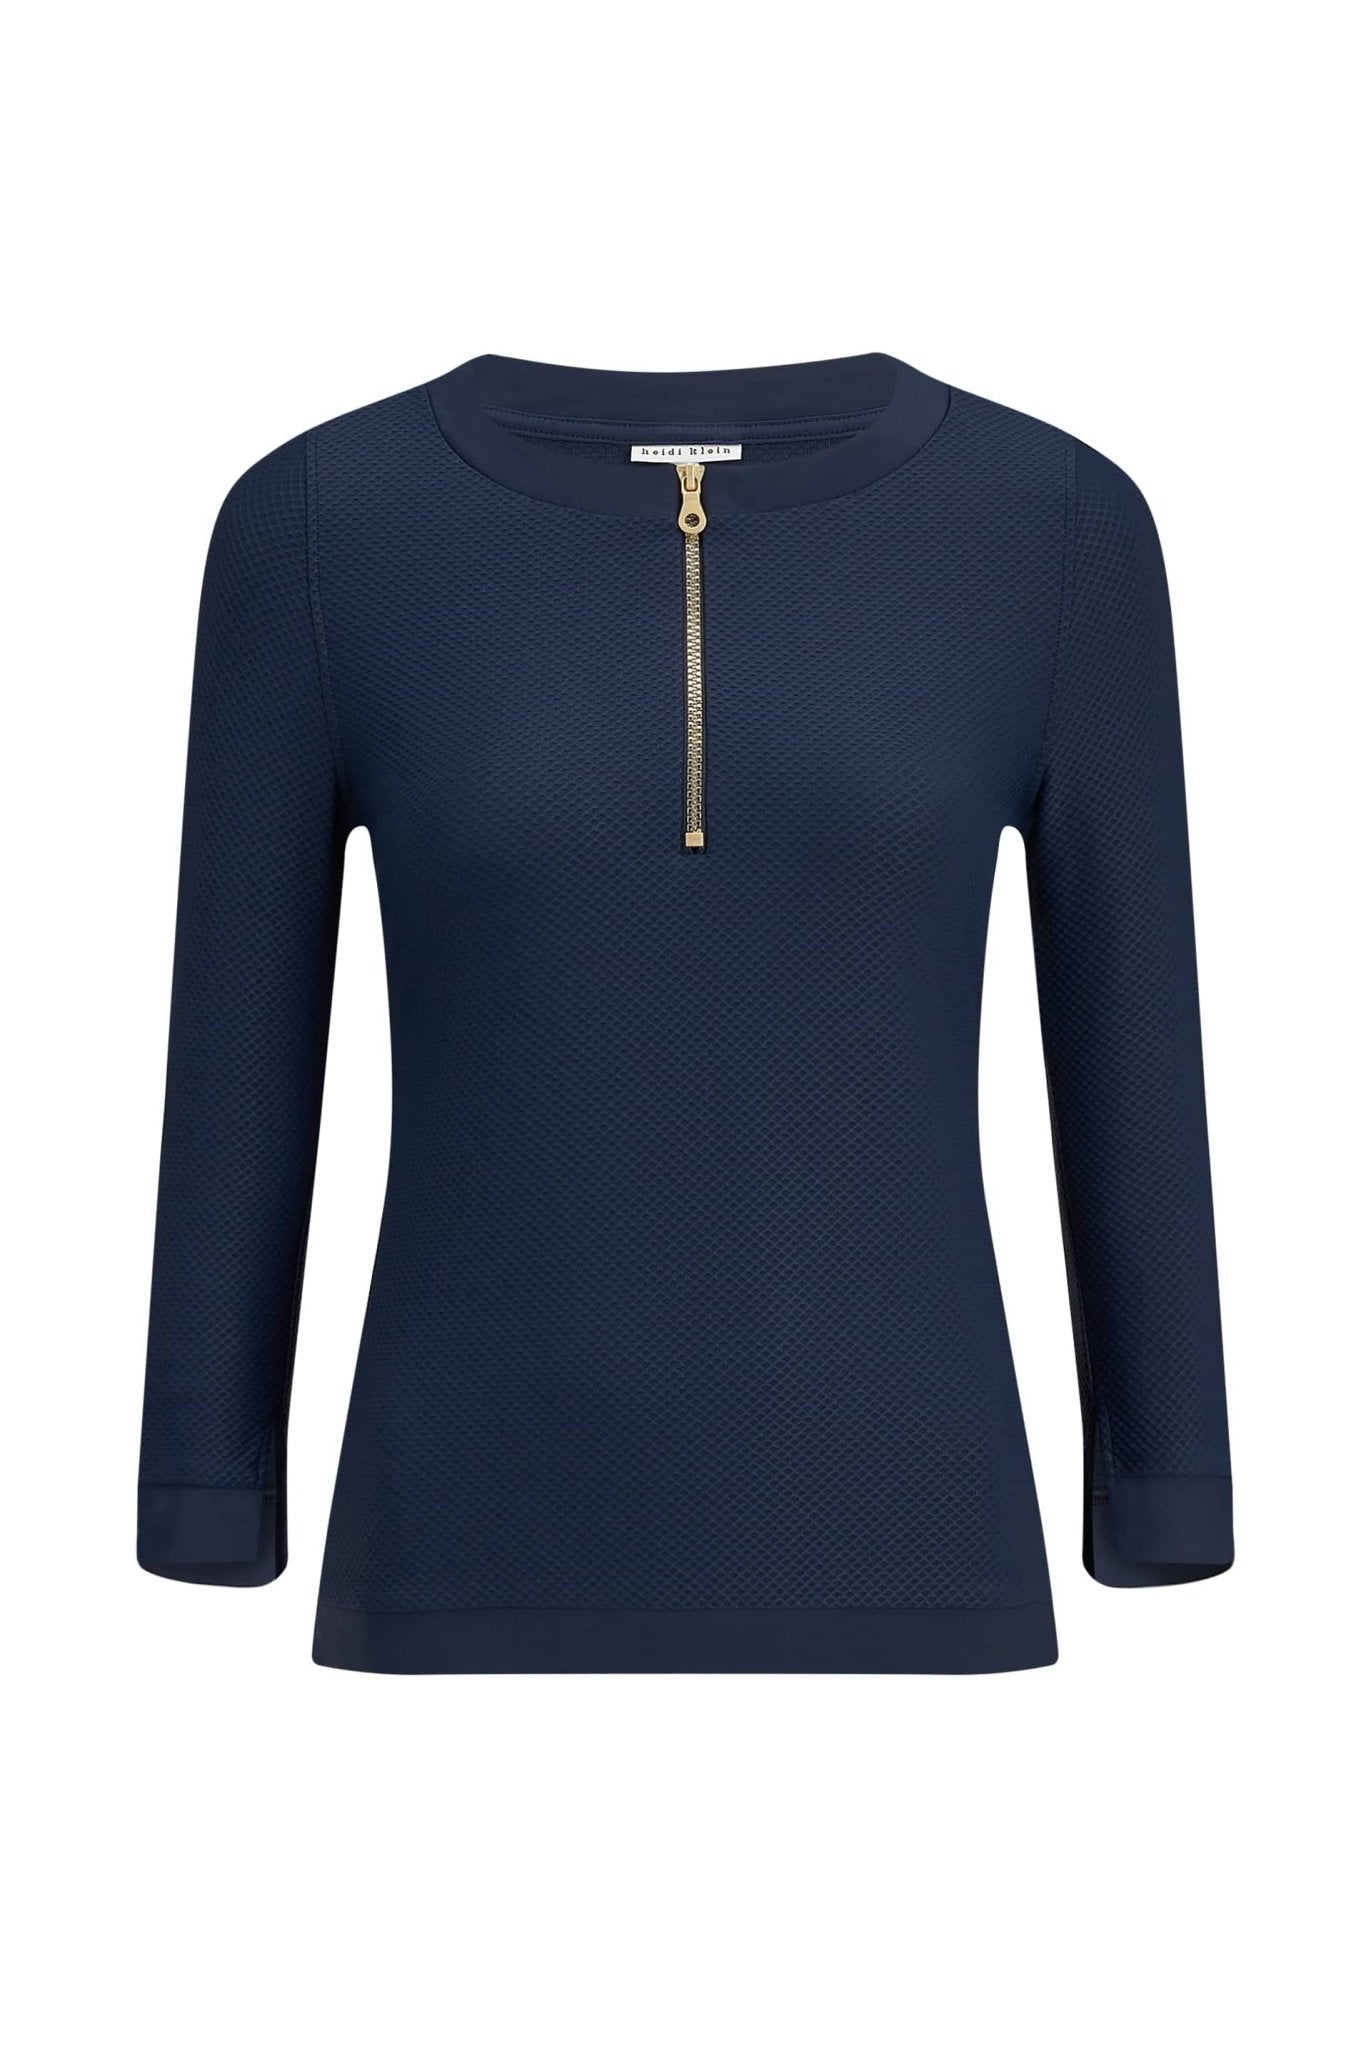 Orient Long Sleeve Vest in Navy Blue - Heidi Klein - UK Store